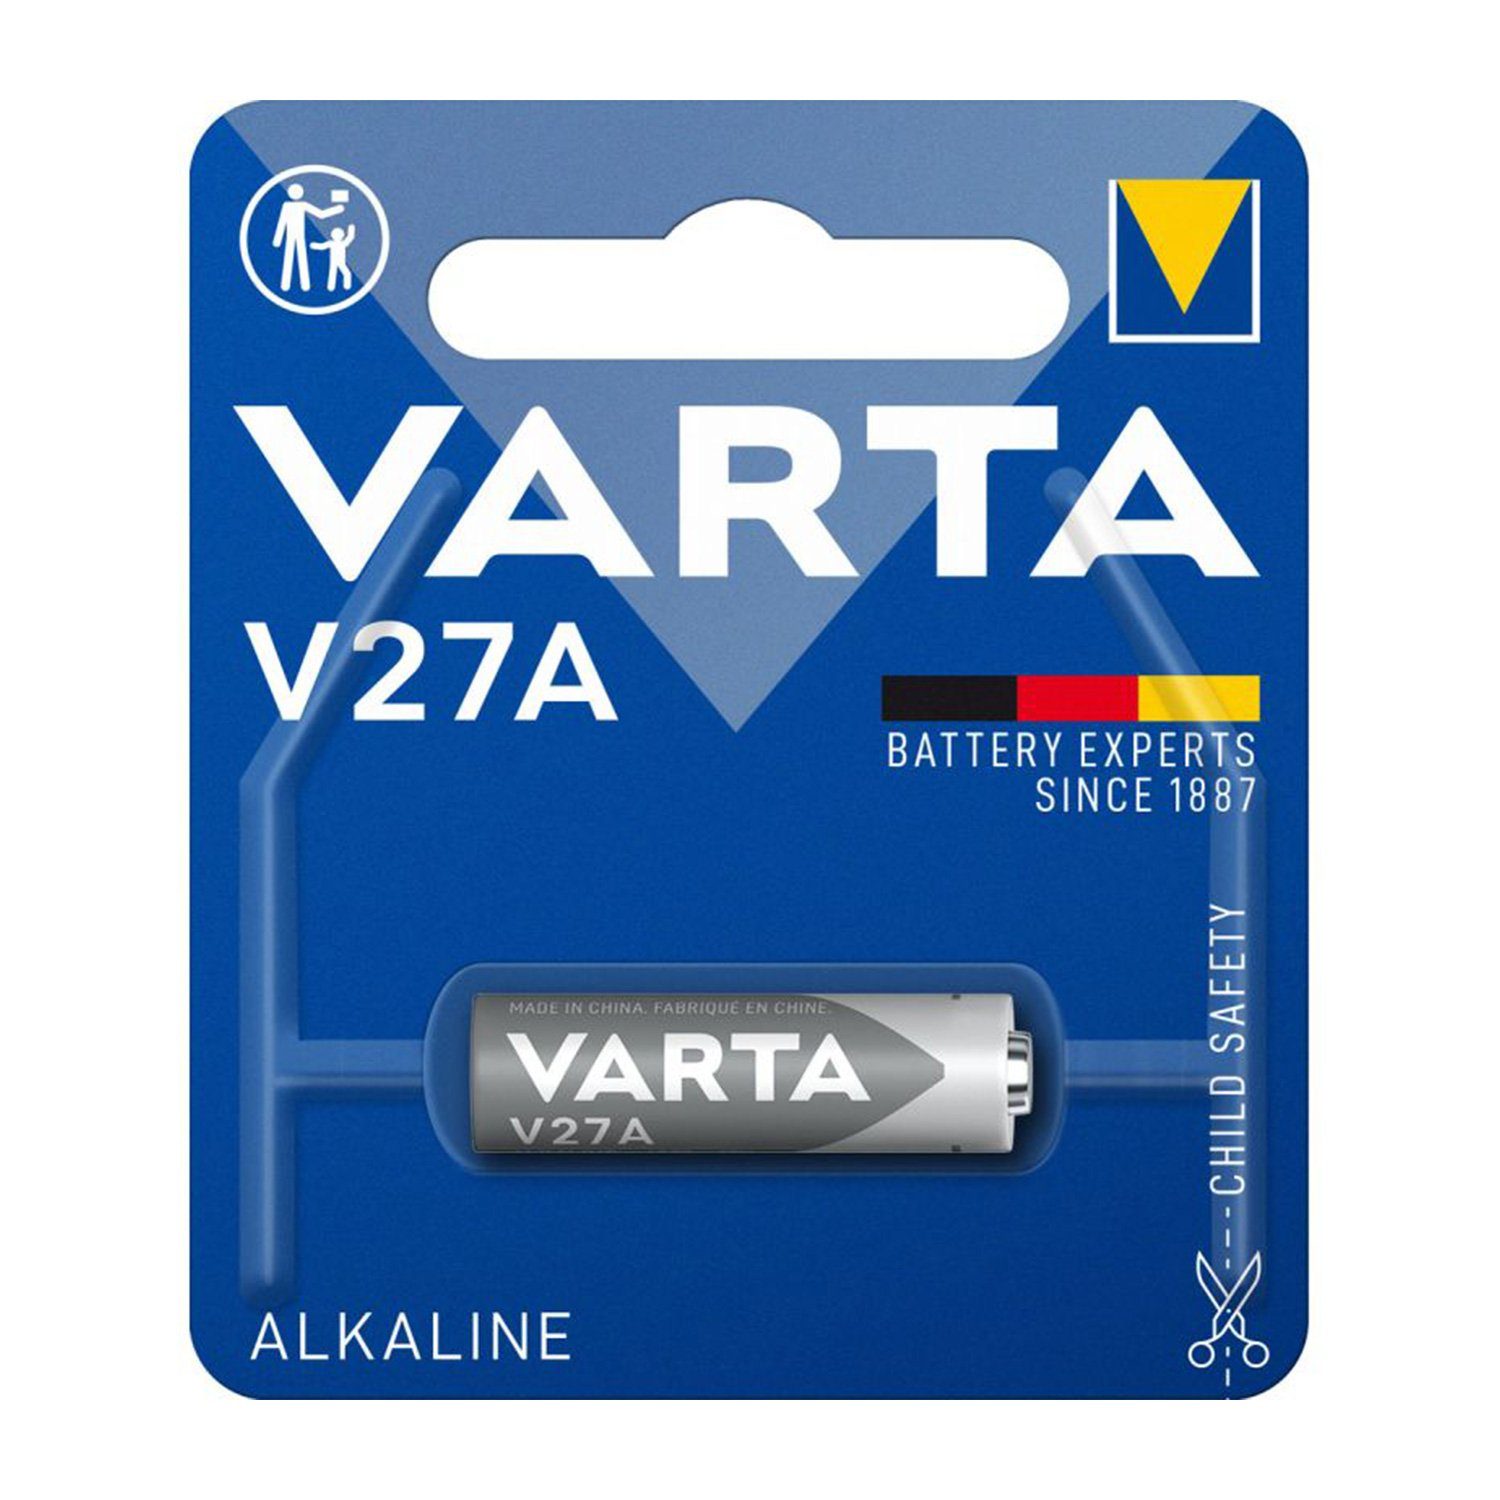 VARTA Varta V27A/ MN27 Fotobatterie 12V Batterie